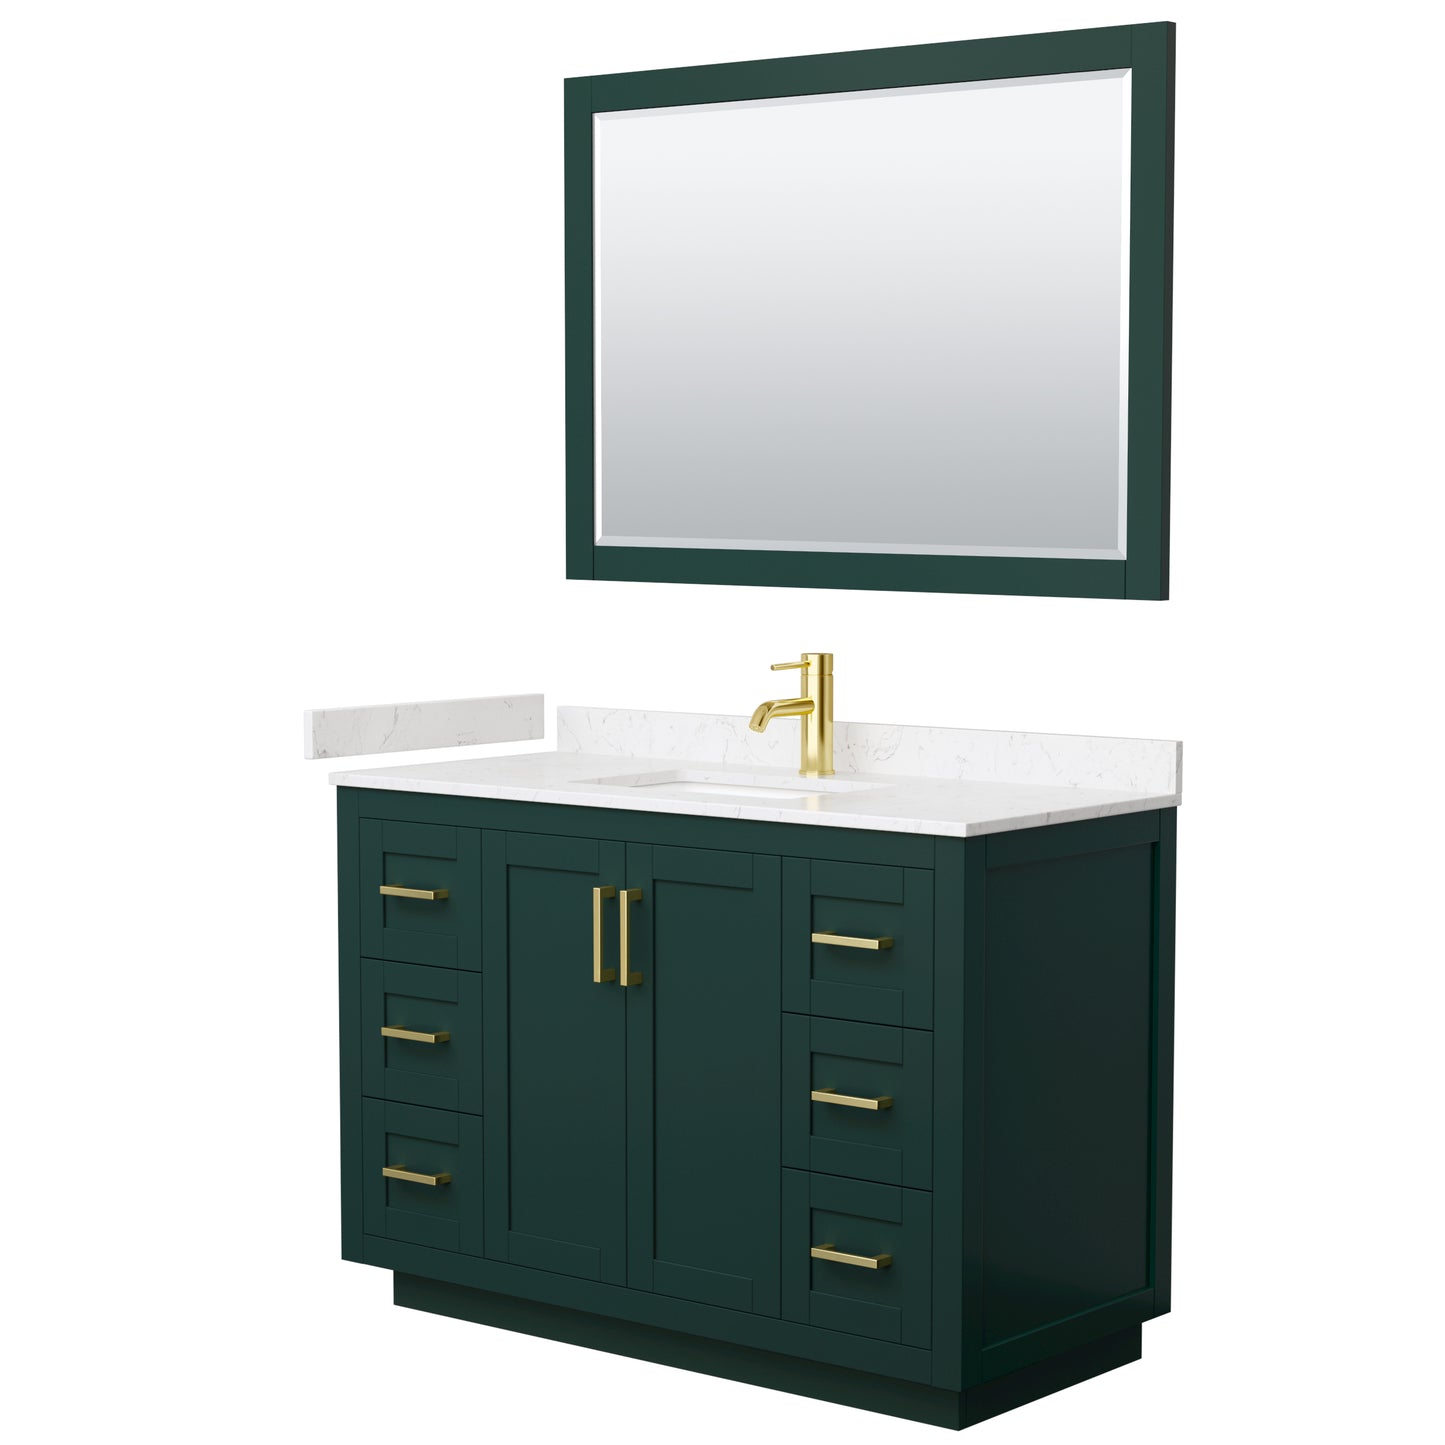 Wyndham Miranda 48 Inch Single Bathroom Vanity in Green with Light-Vein Carrara Cultured Marble Countertop Undermount Square Sink and Trim - Luxe Bathroom Vanities